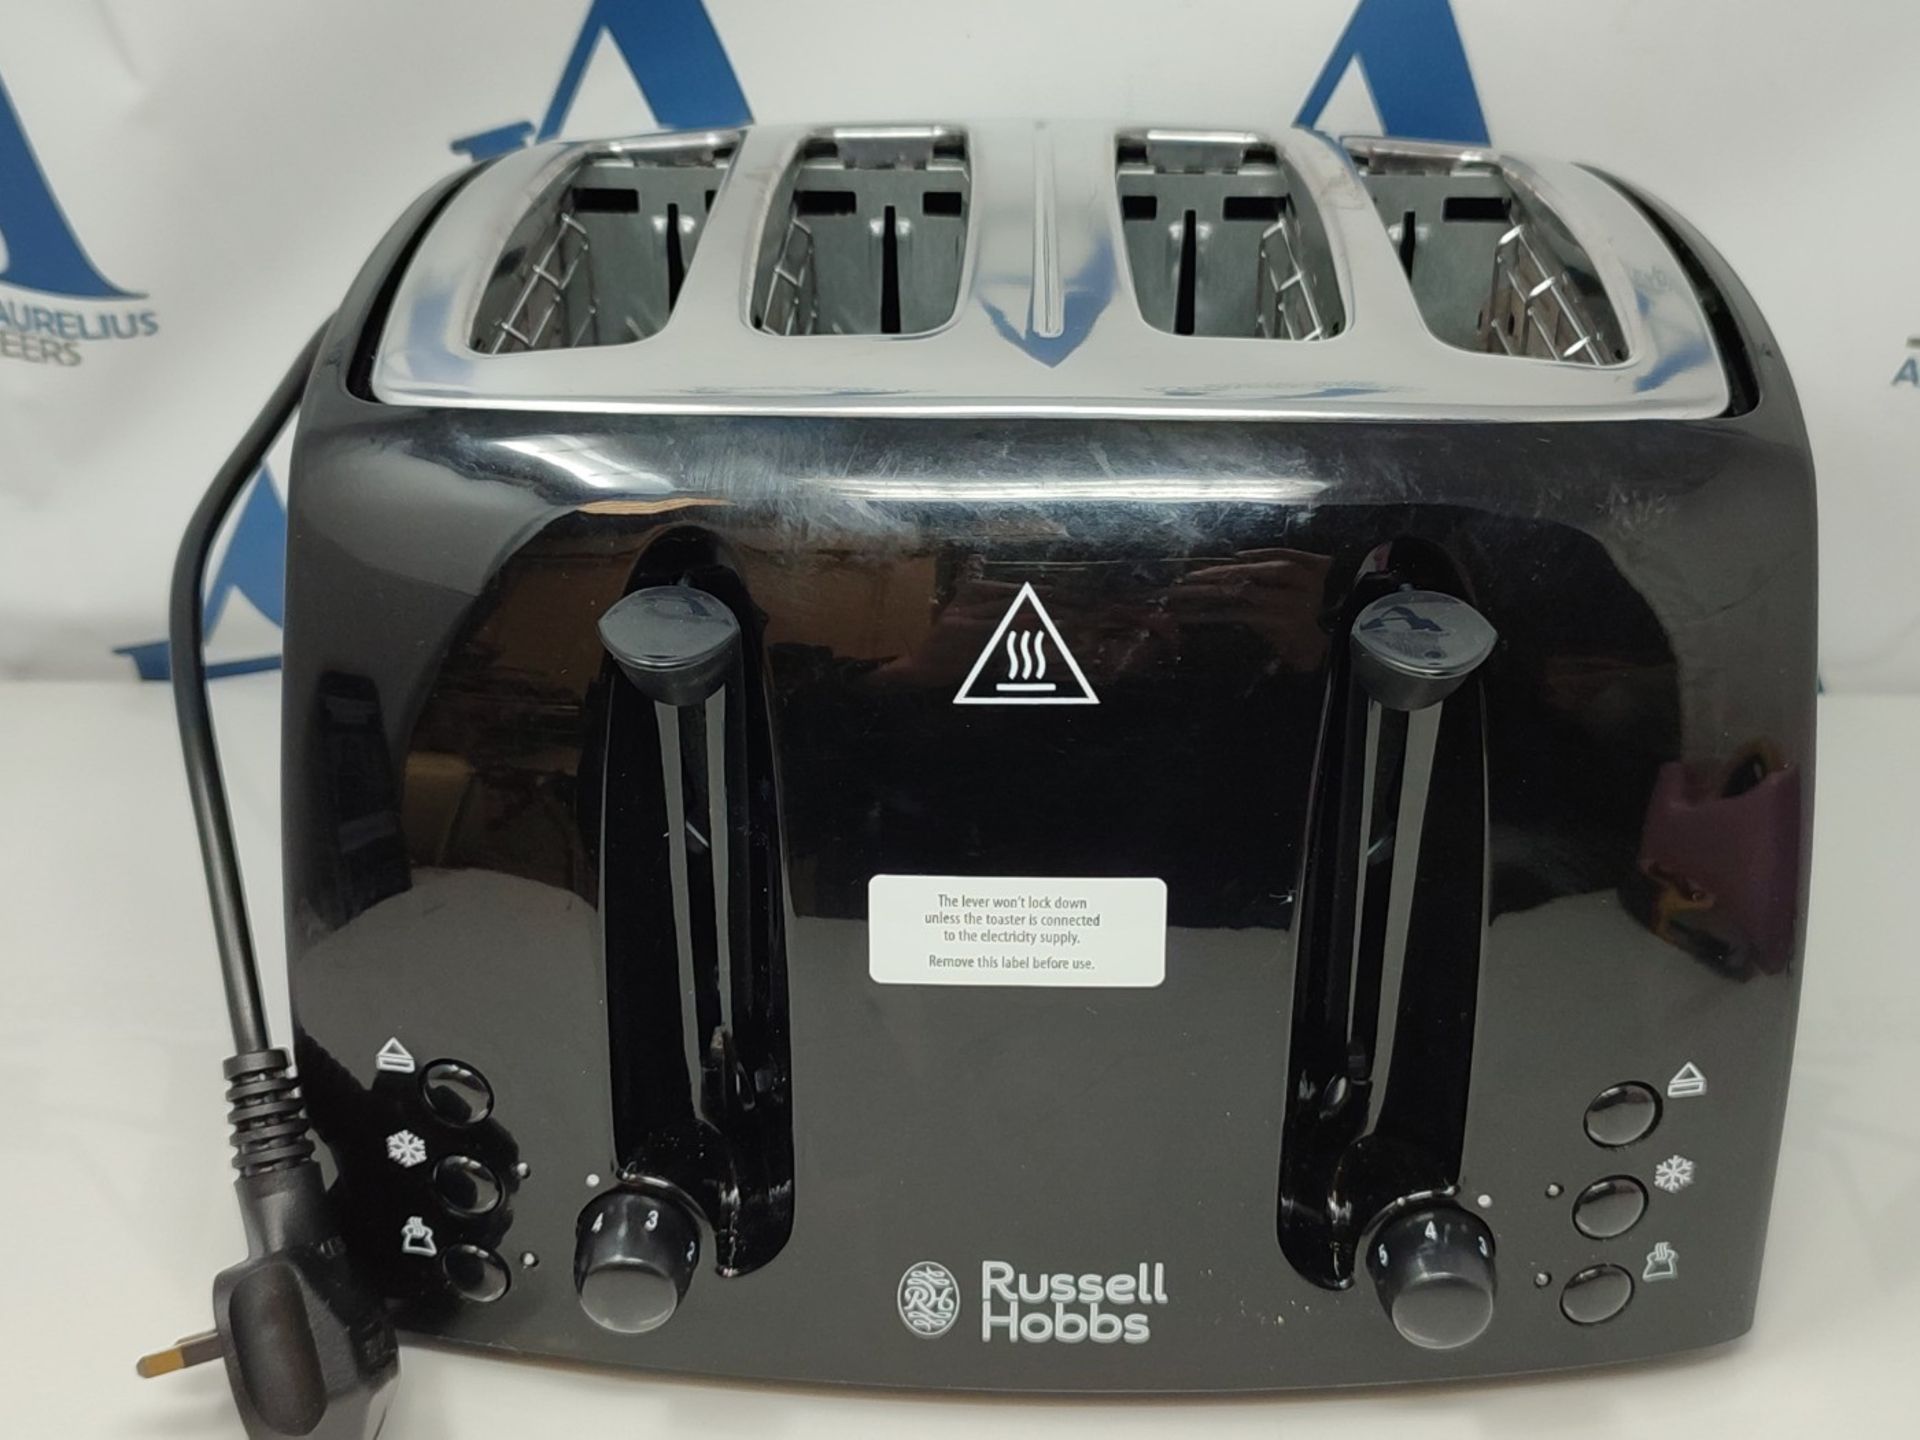 Russell Hobbs 21651 Textures 4-Slice Toaster 21651-Black, Plastic, Black - Image 2 of 2